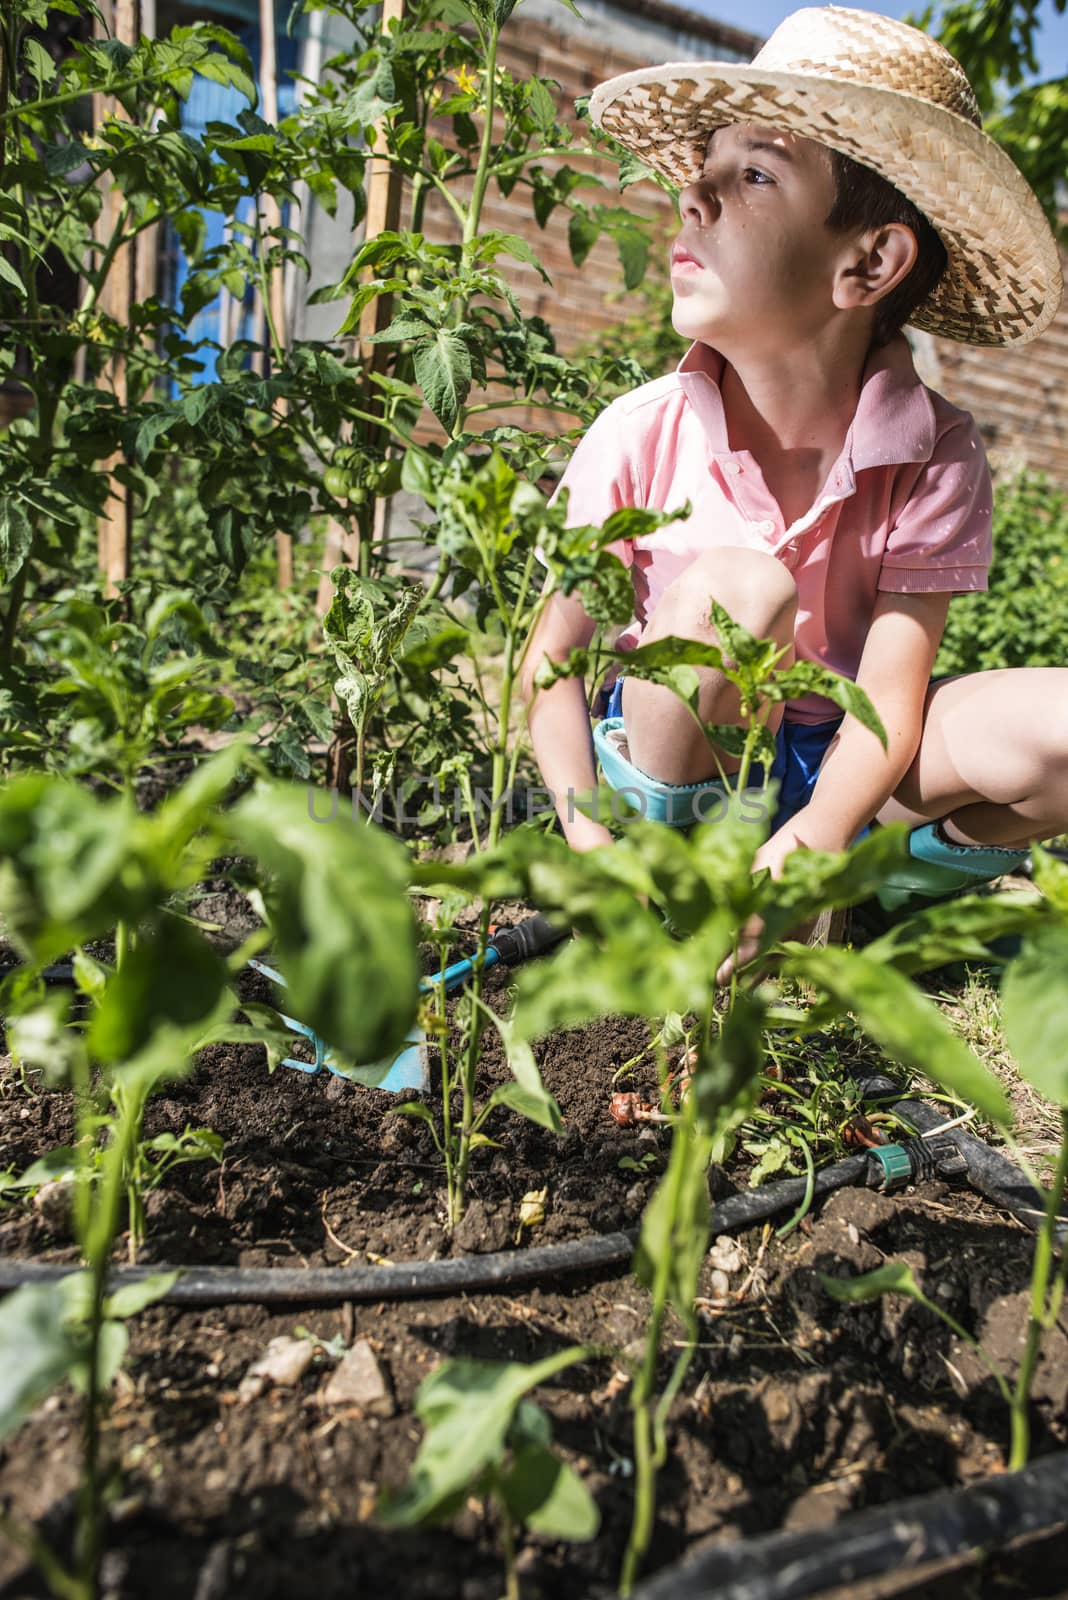 Child planting plans in a garden by deyan_georgiev